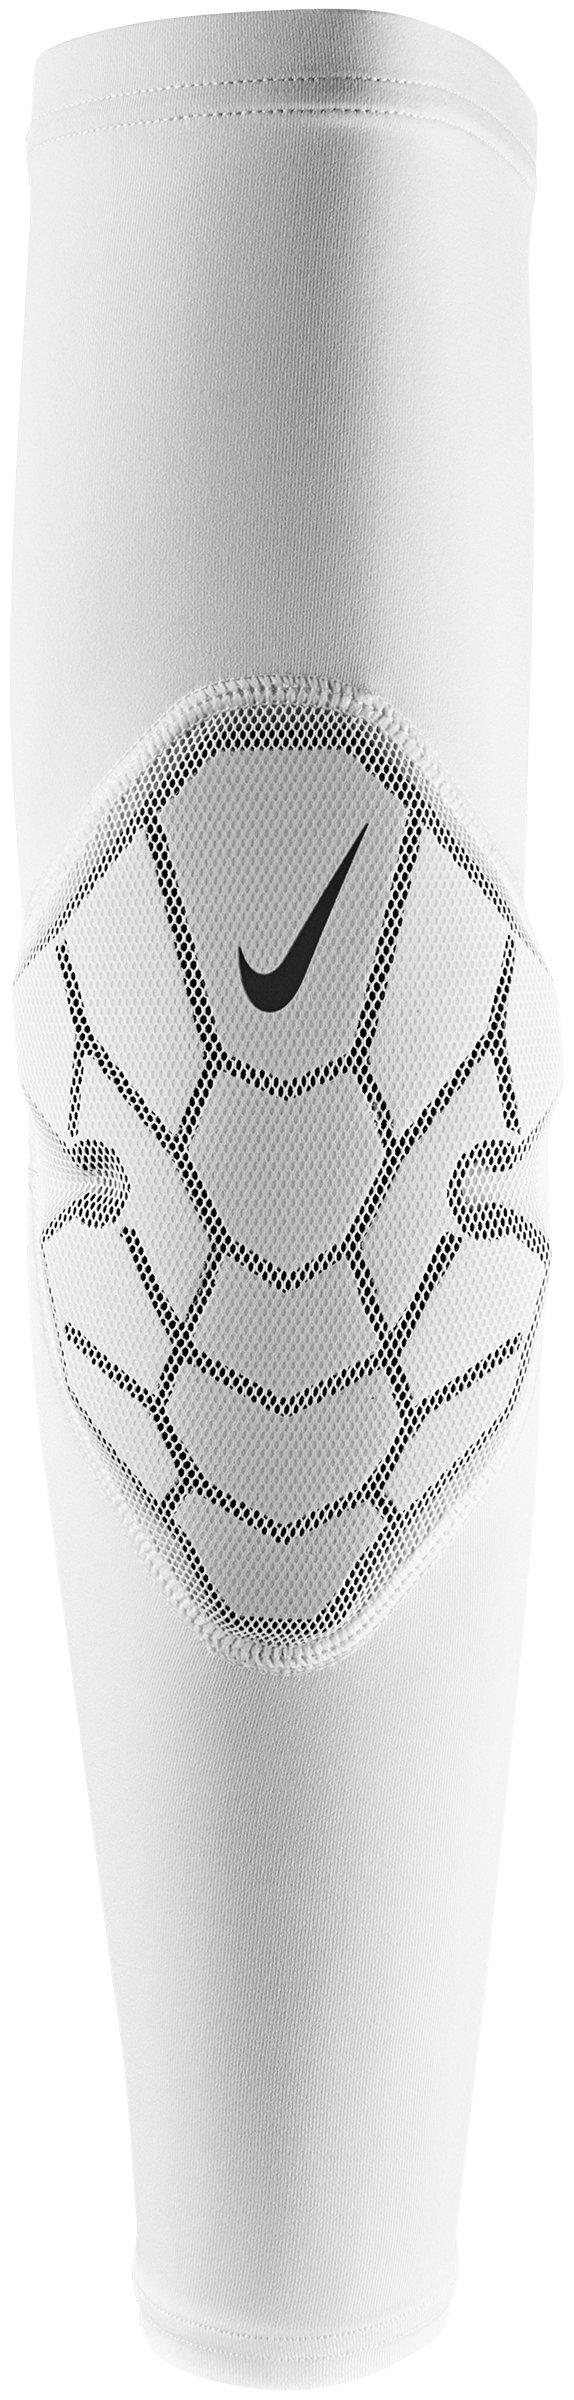 Nike Air Jordan Pro Hyperstrong Padded Elbow Sleeve UCLA Bruins White L/XL  NEW